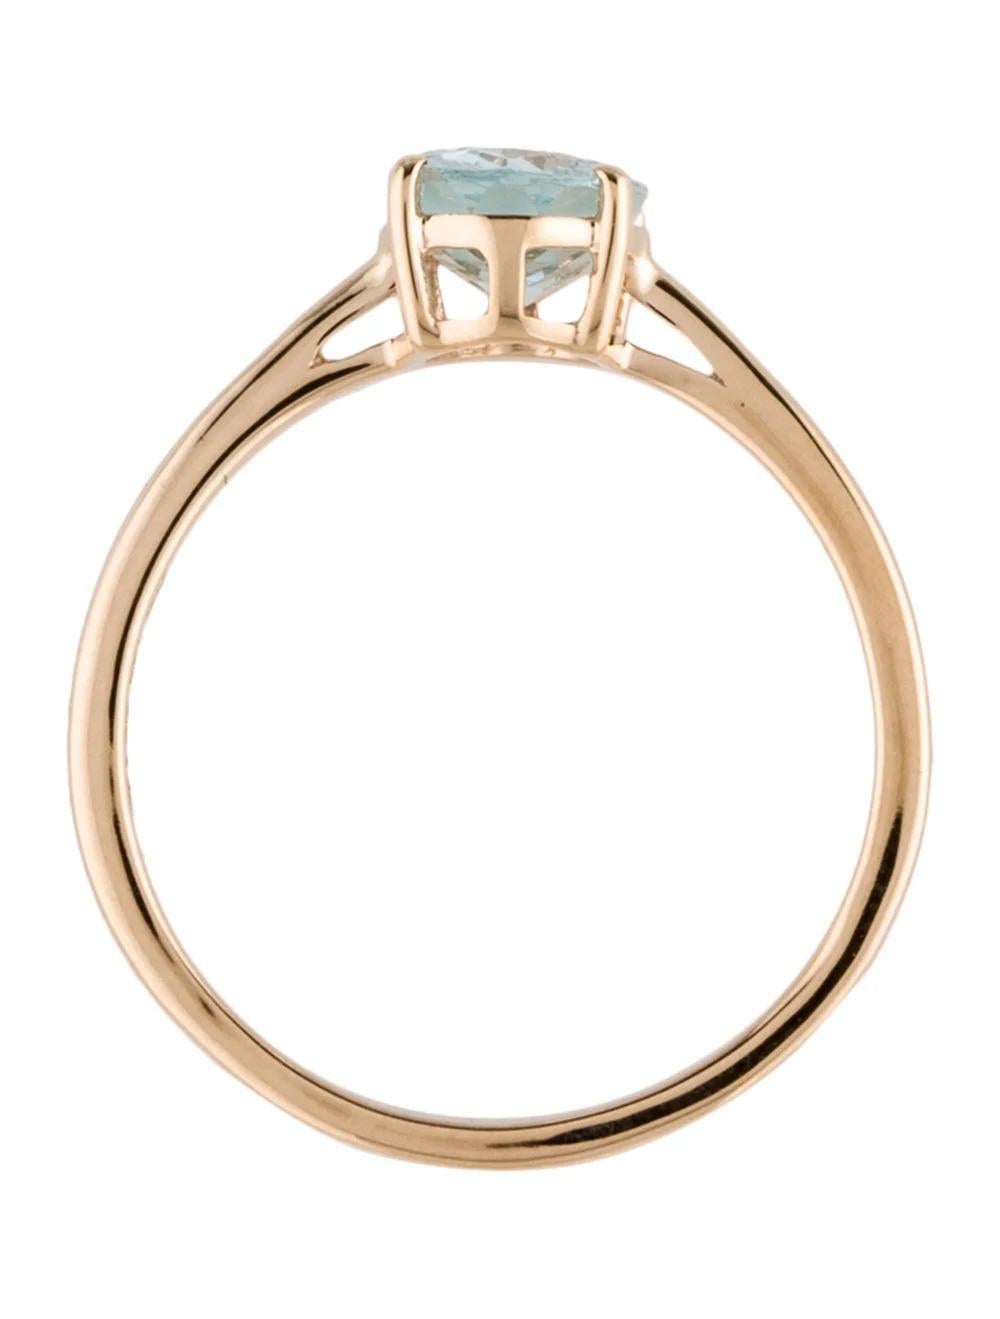 14K 1.00ct Aquamarine Cocktail Ring Size 6.75 - Blue Gemstone, Statement Jewelry Pour femmes en vente